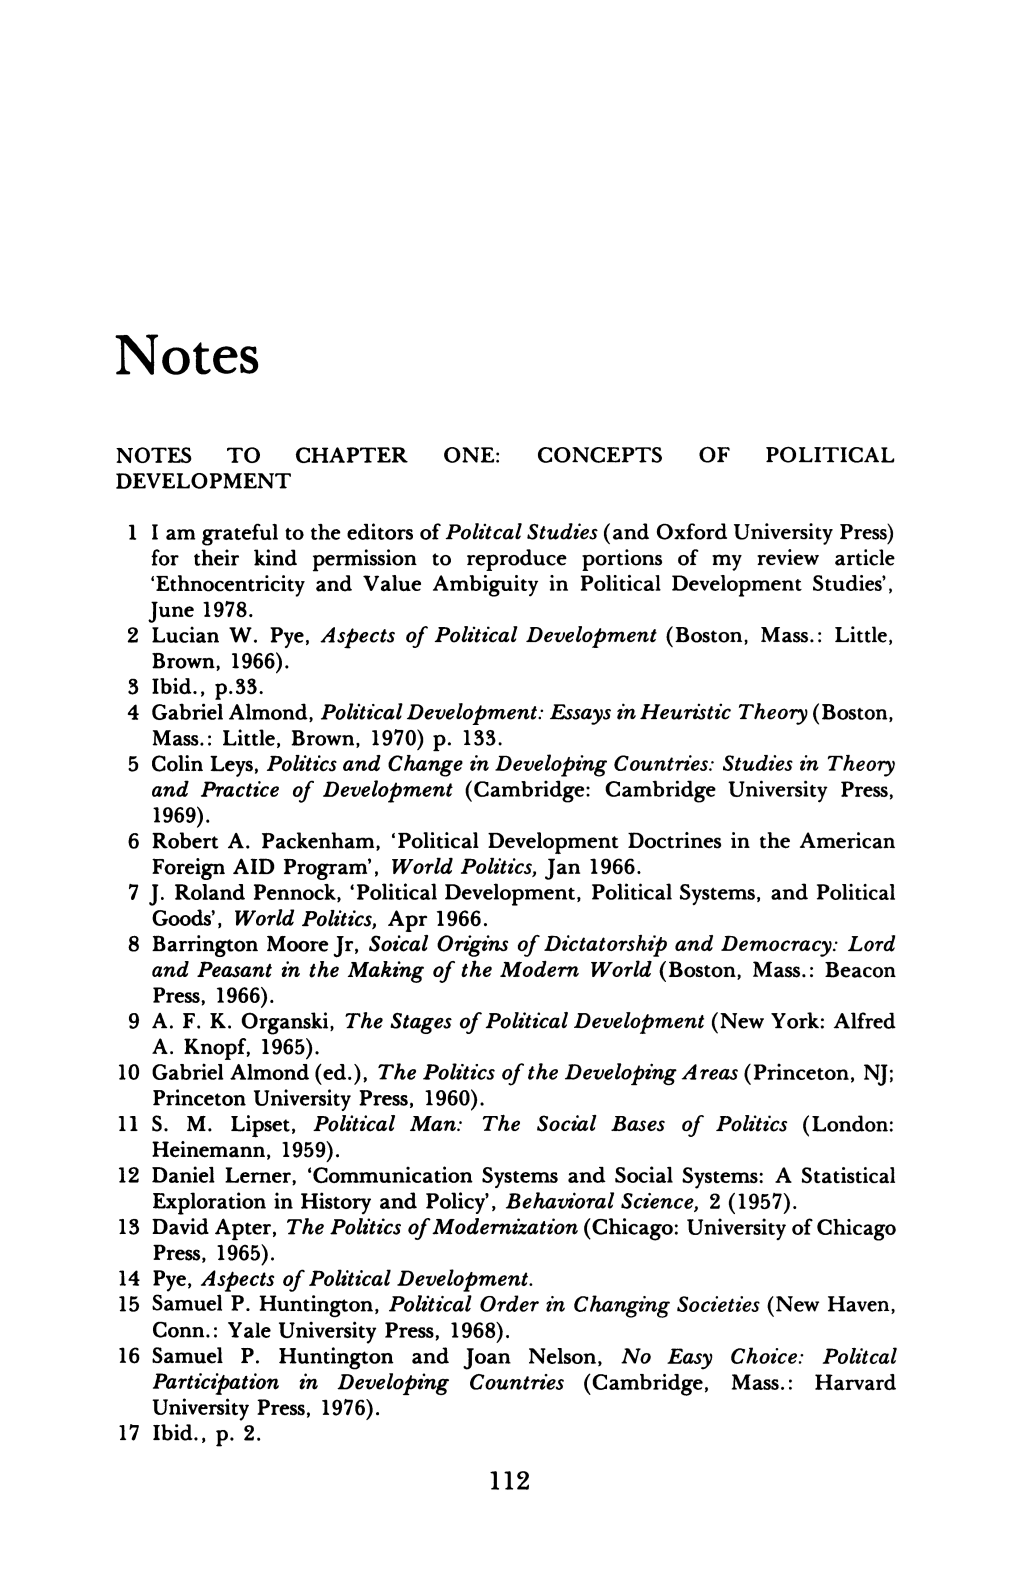 2 Lucian W. Pye, Aspects of Political Development (Boston, Mass.: Little, Brown, I966)